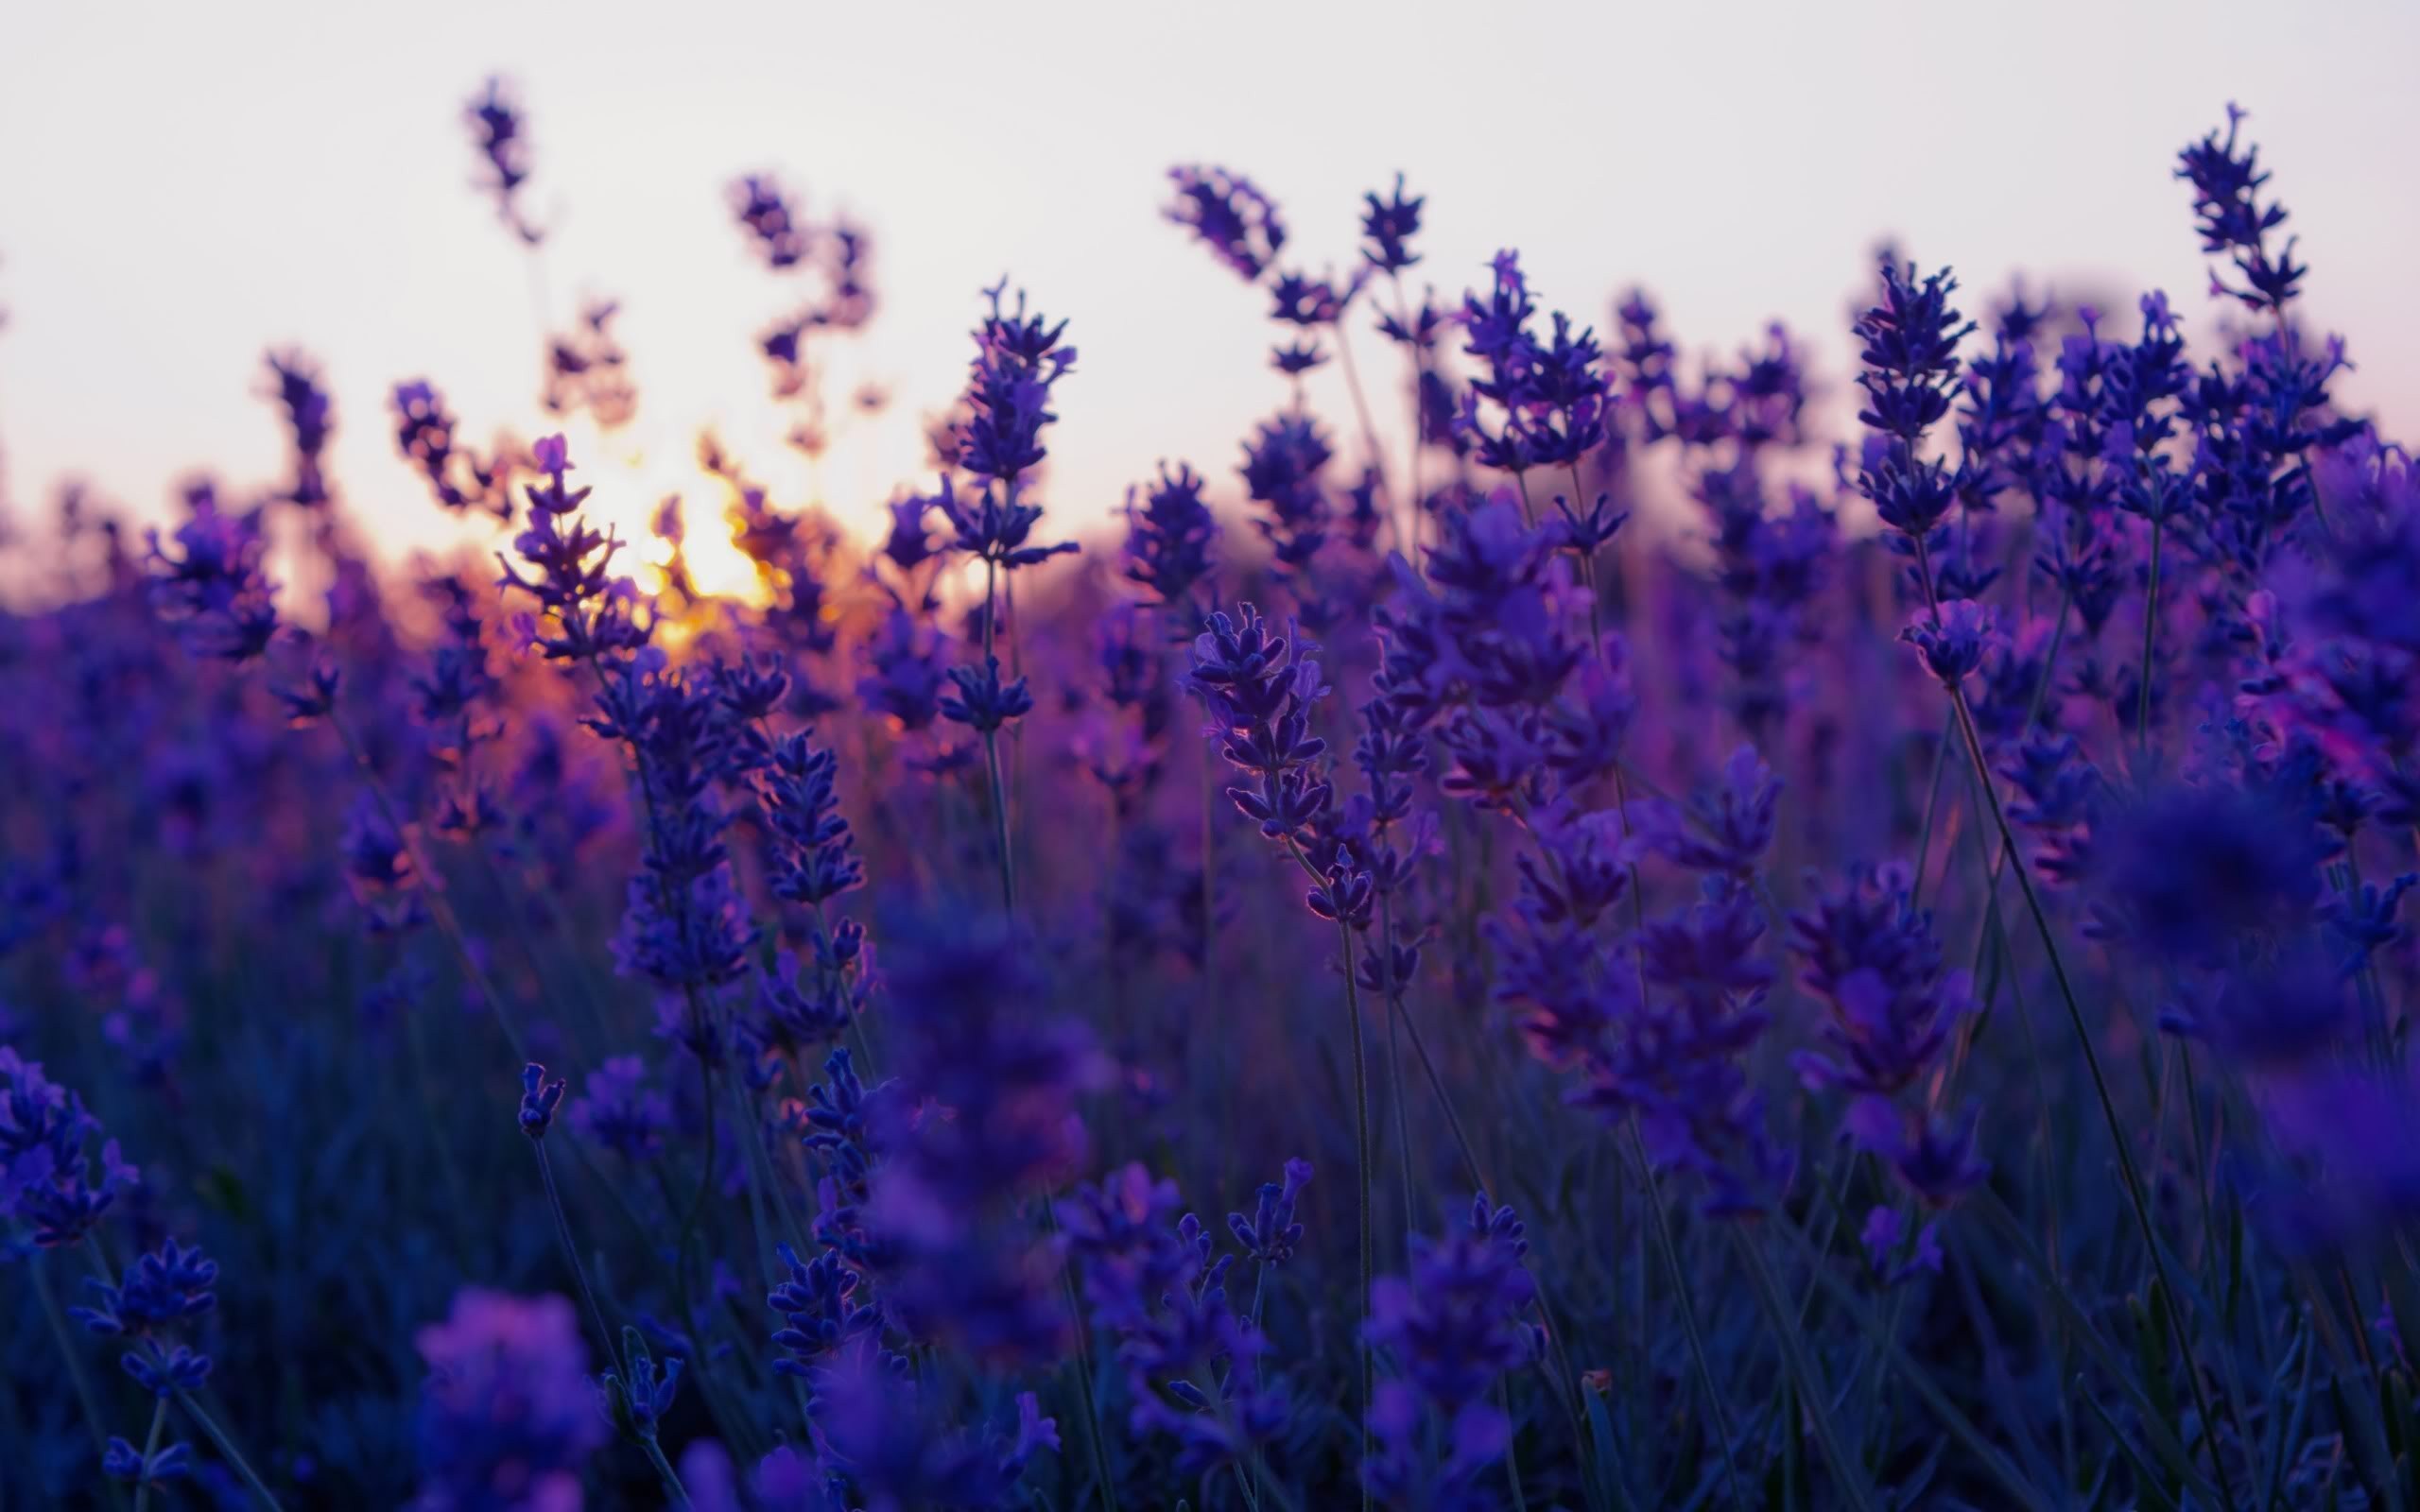 Lavender Flowers Purple